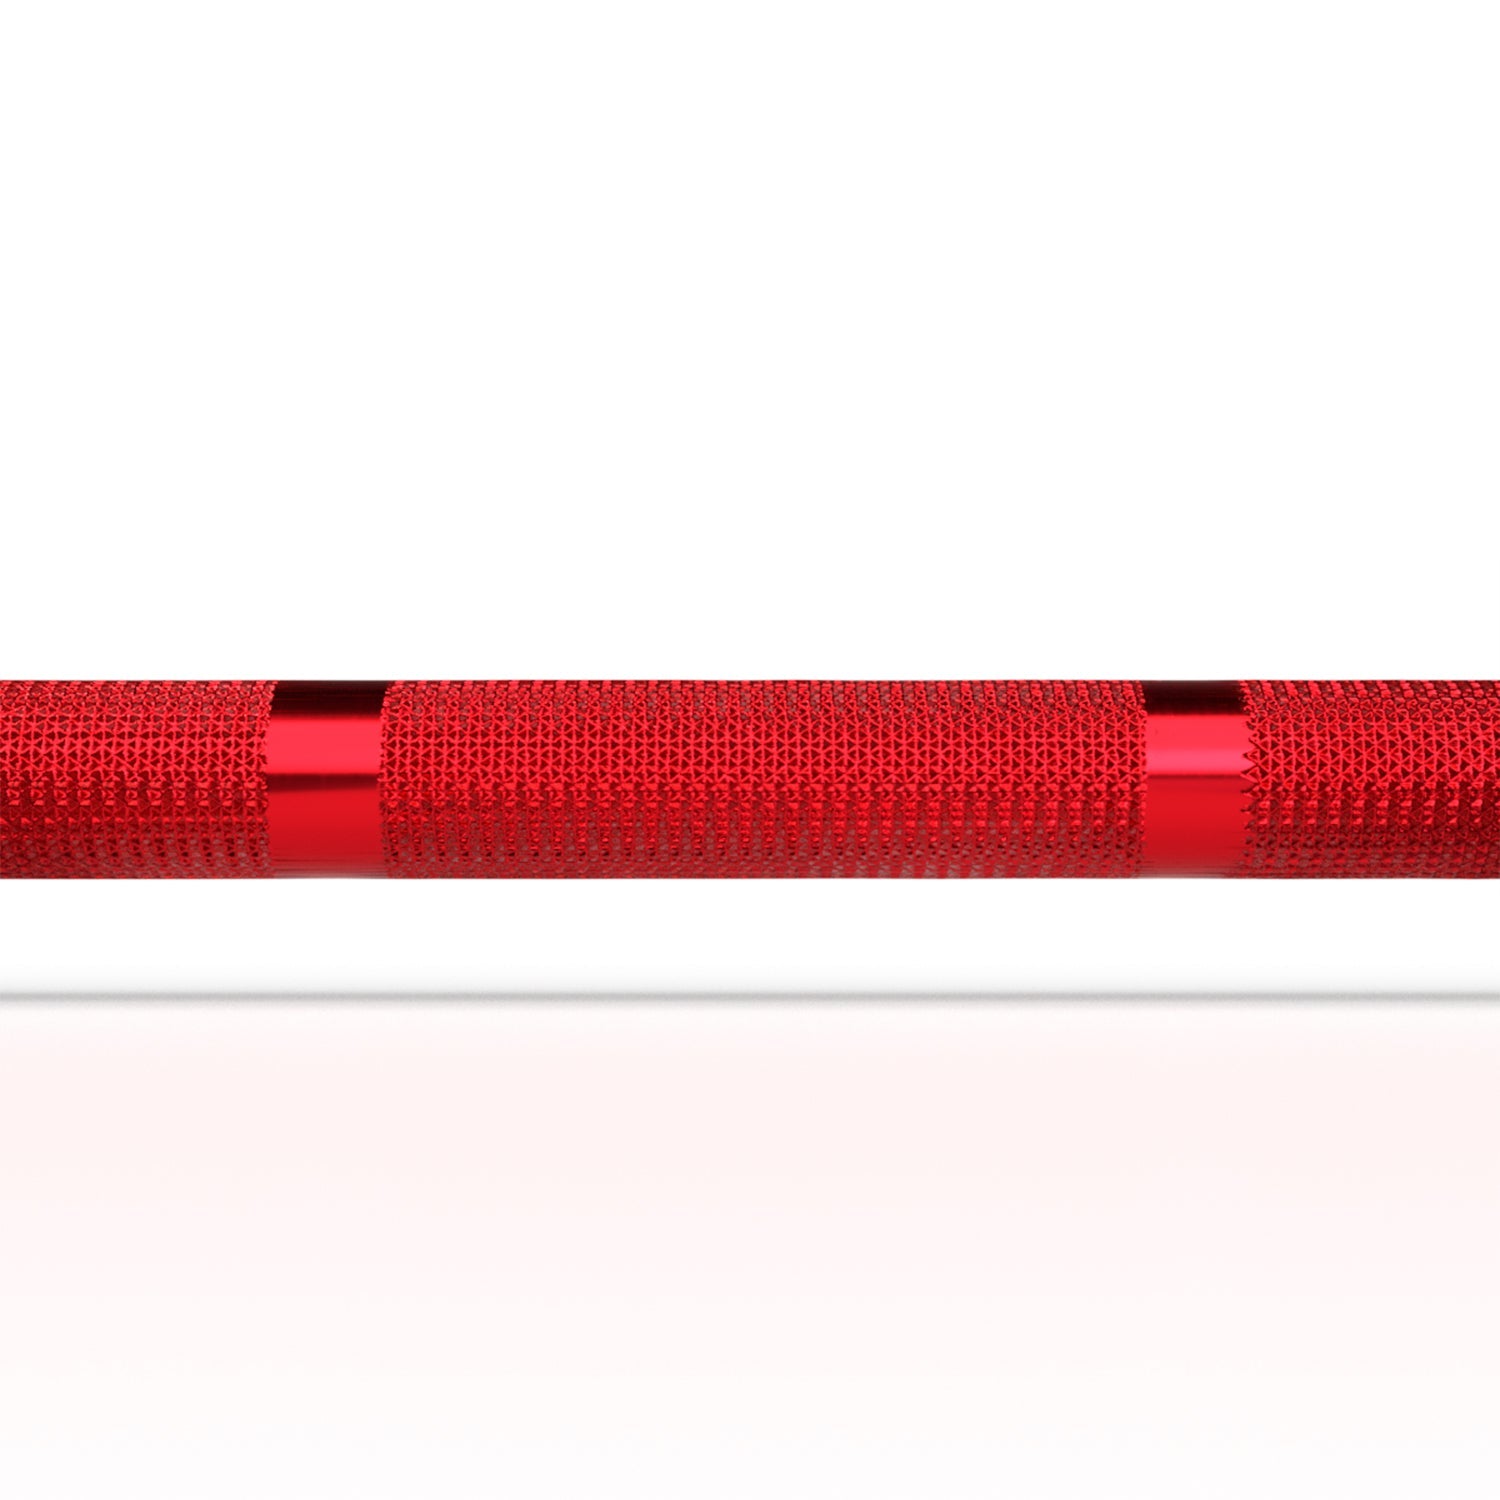 Barra olimpica crossfit Roja 15kg, foto detalle grip diamantado